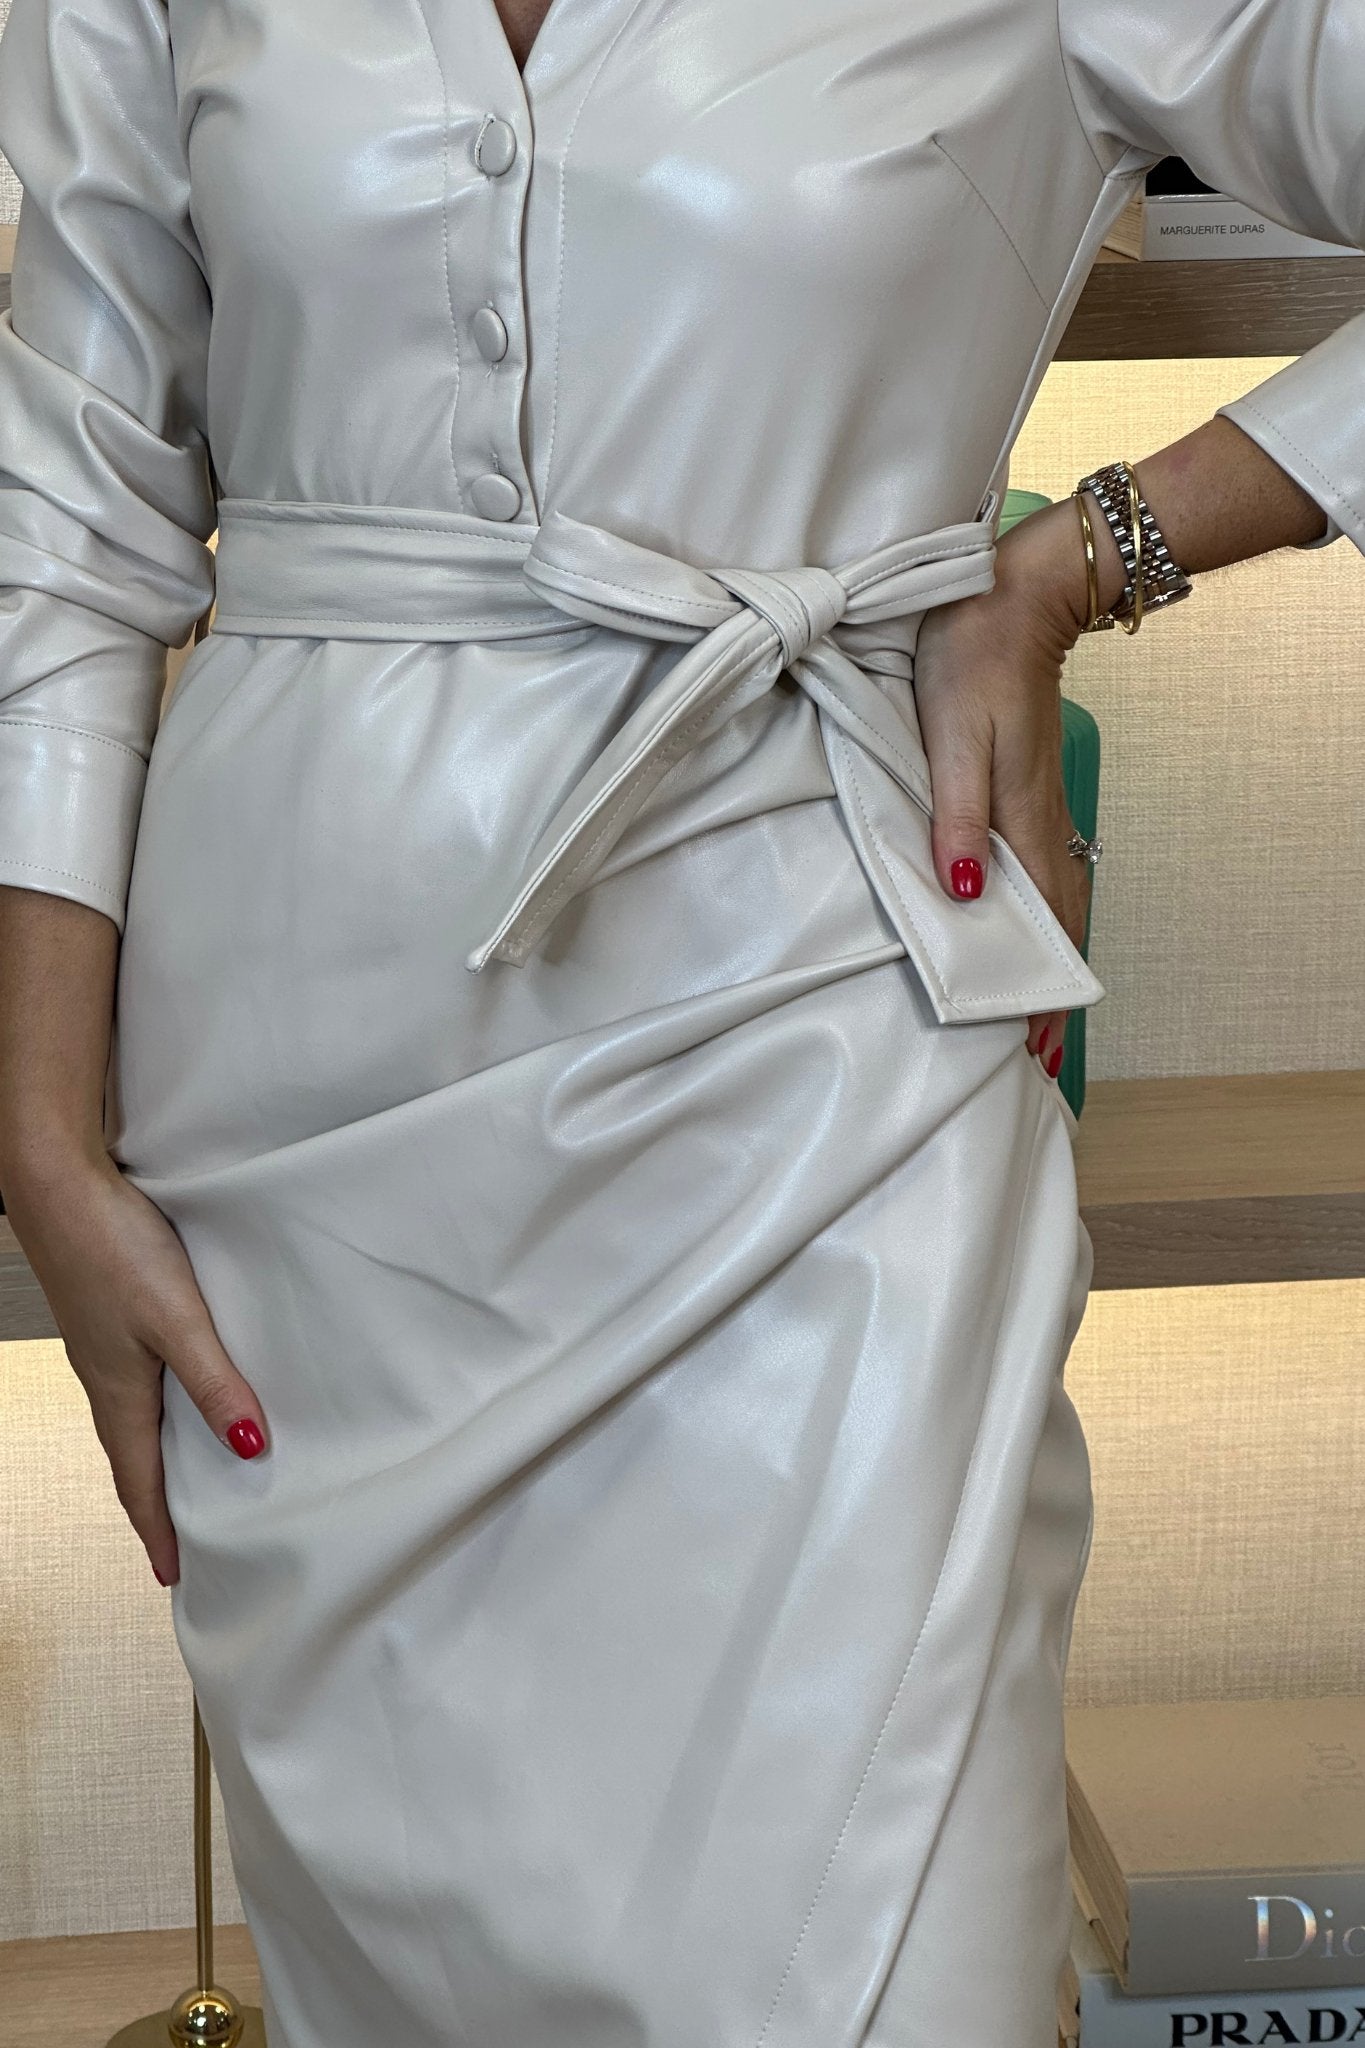 Pia Leather Wrap Dress In Cream - The Walk in Wardrobe